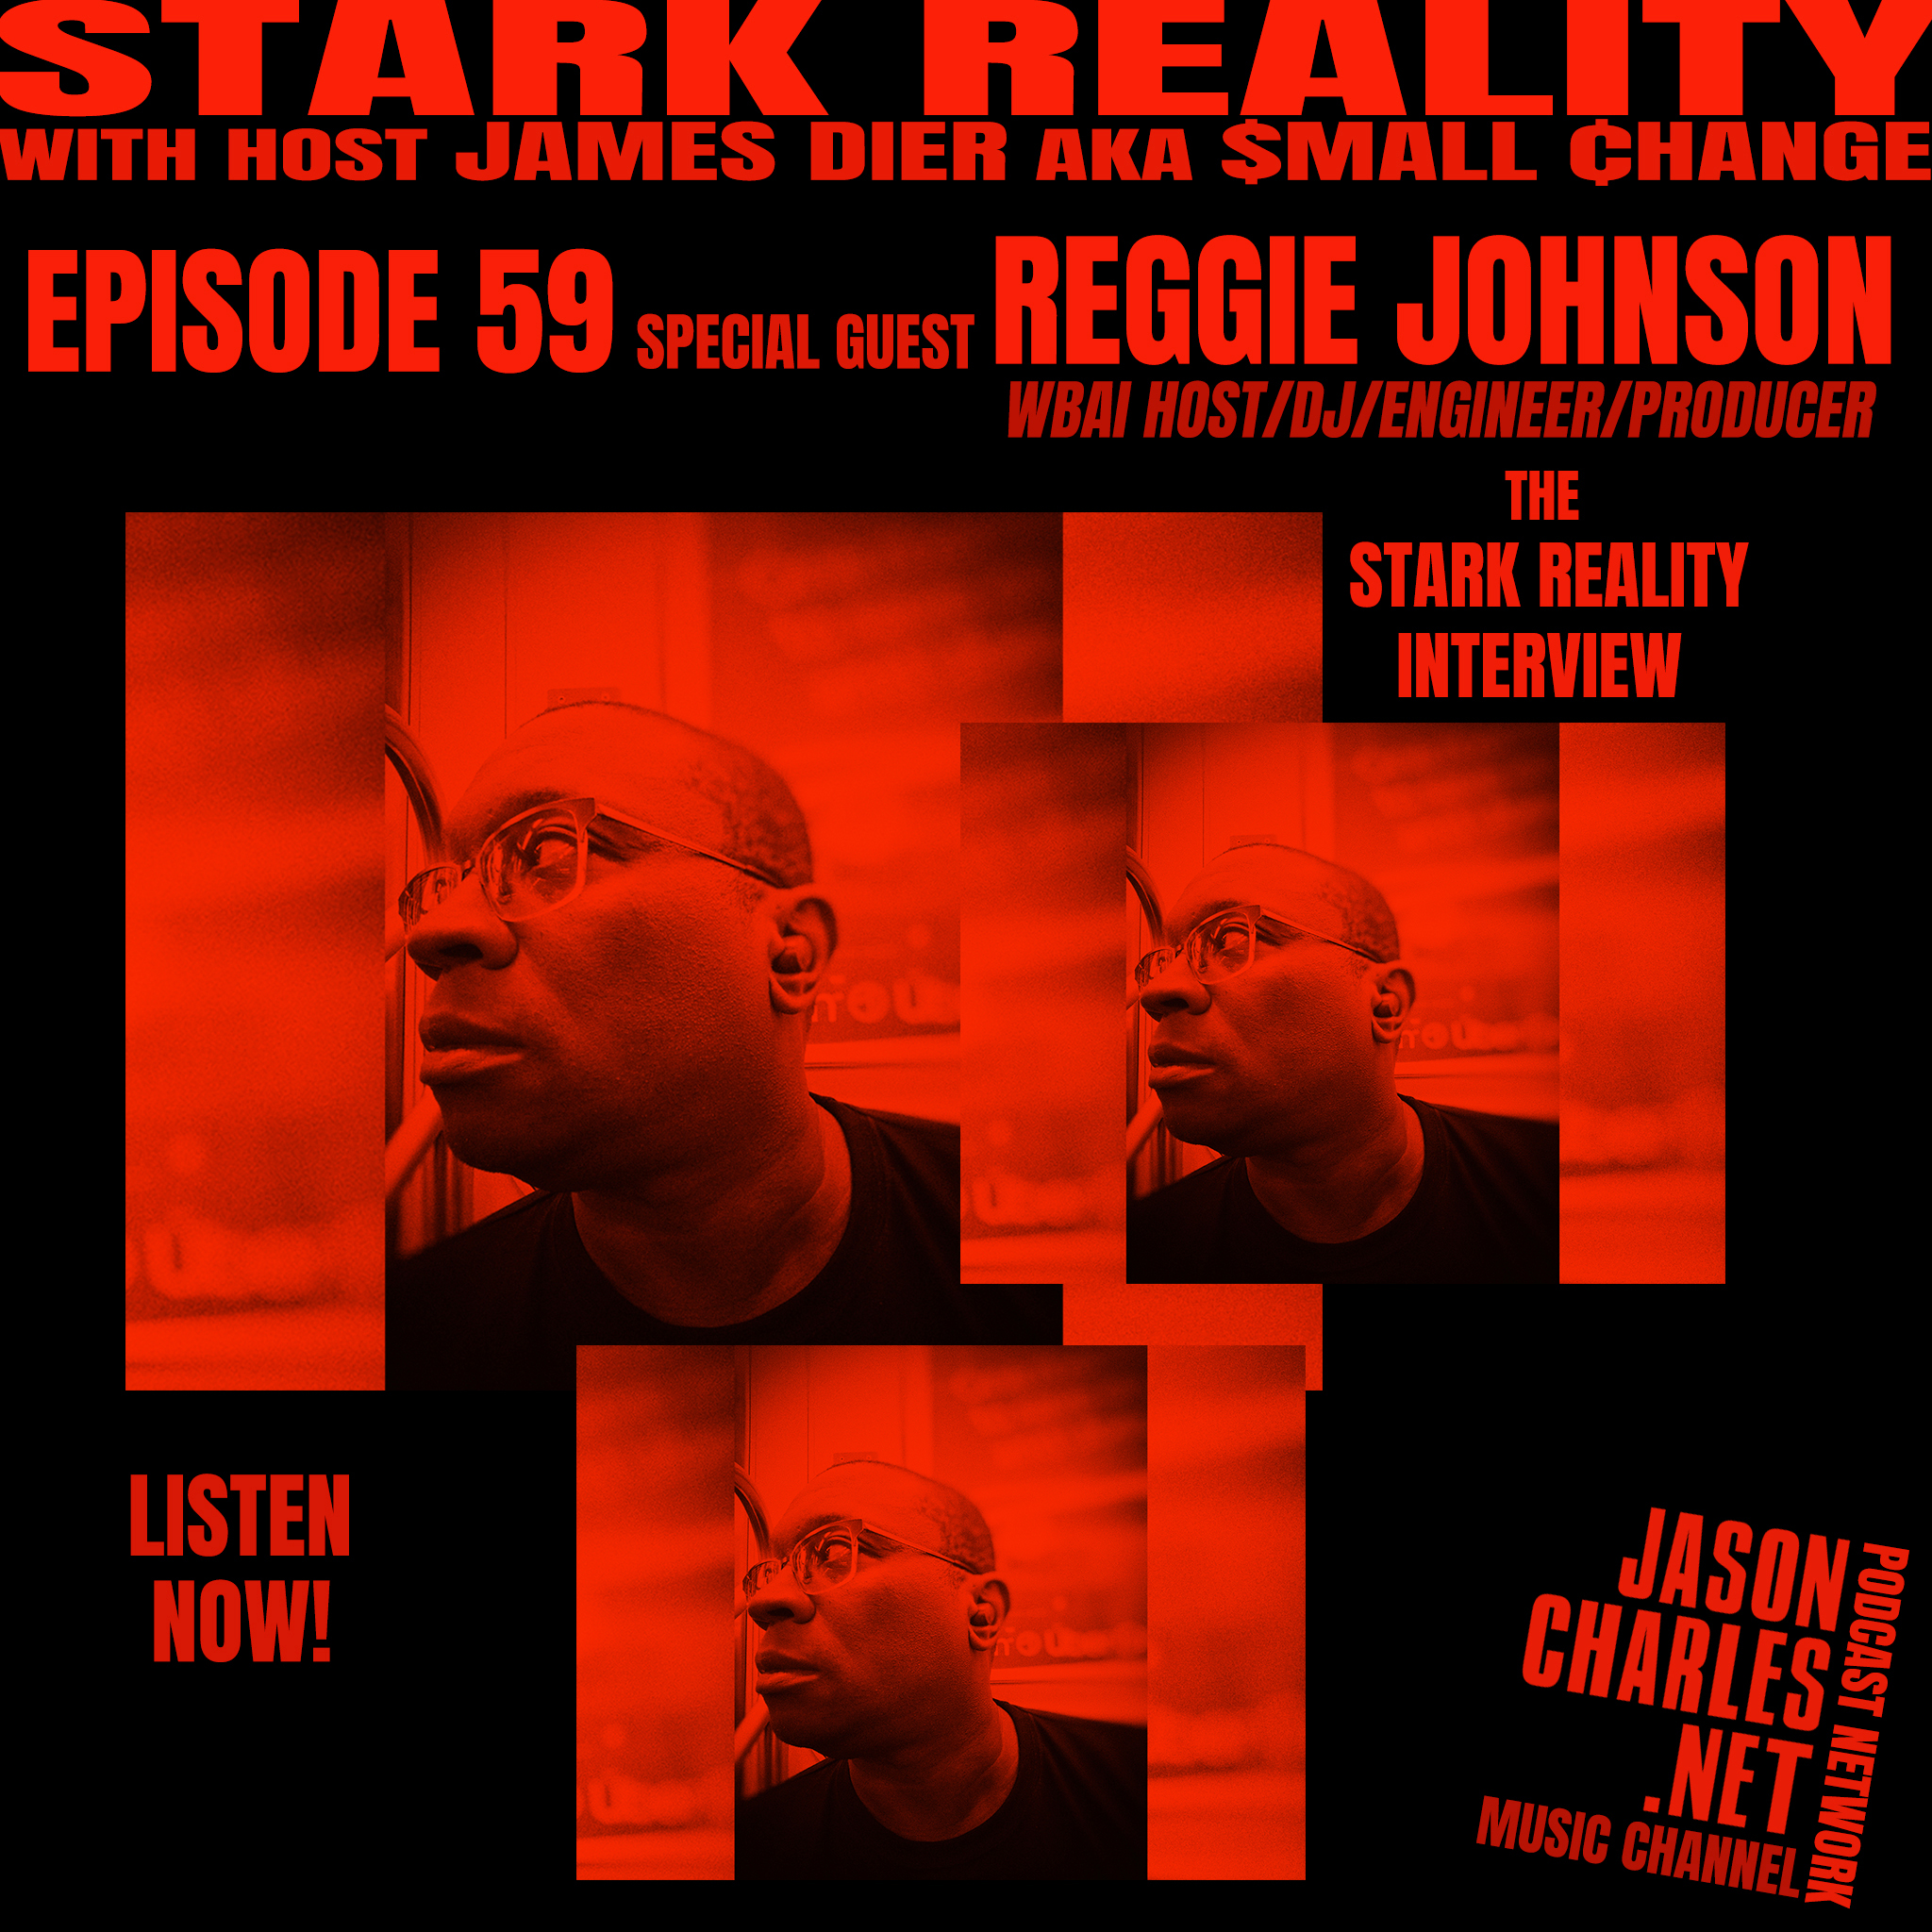 STARK REALITY Episode 59 Guest REGGIE JOHNSON